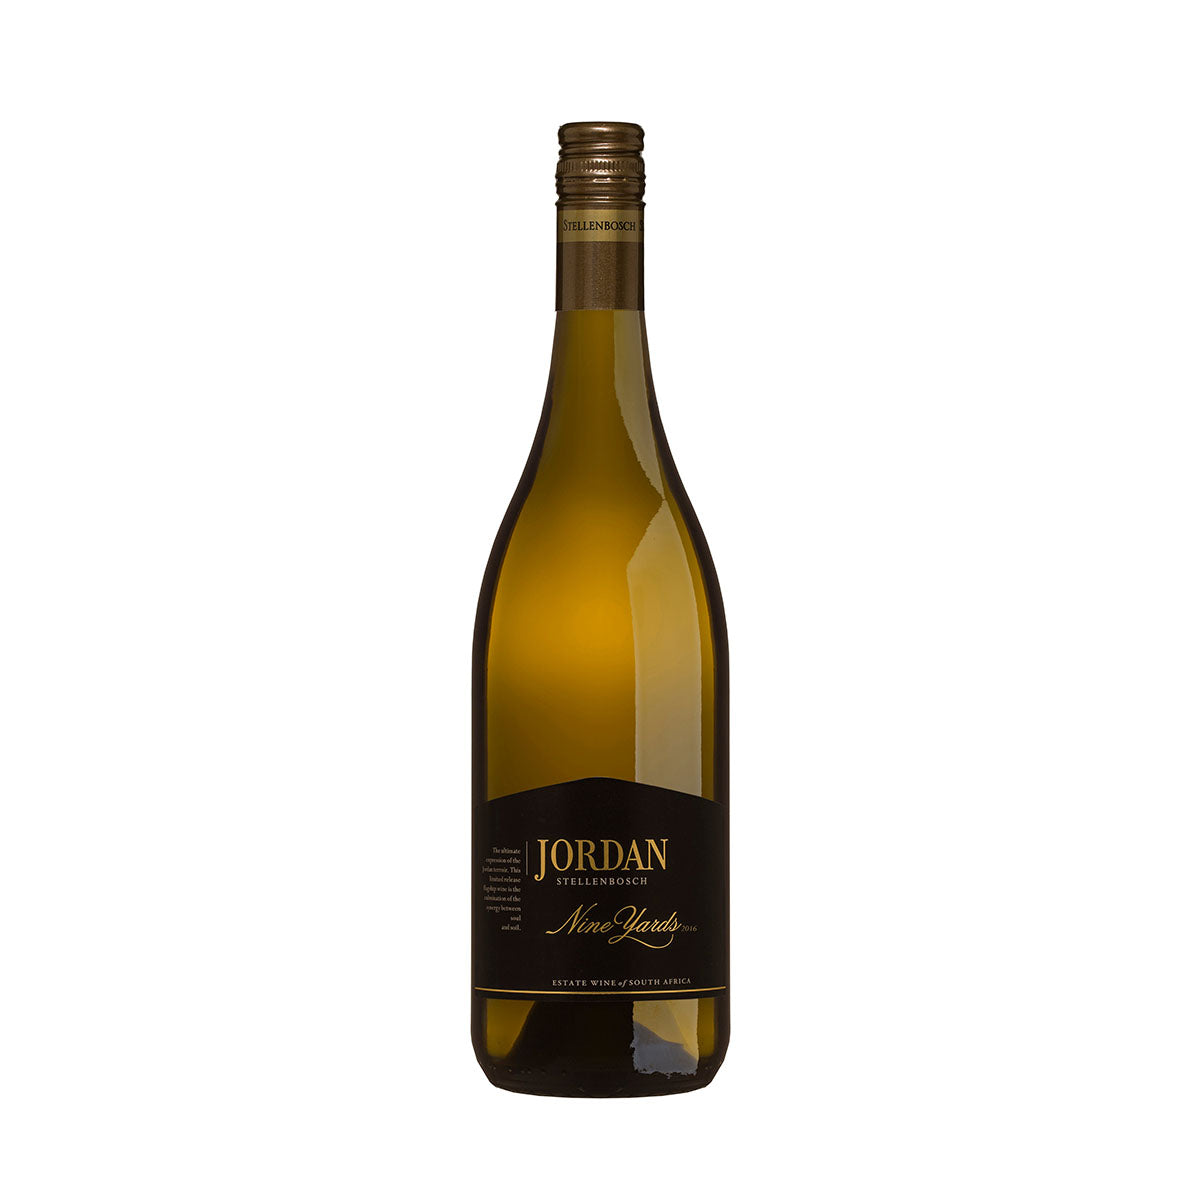 Jordan 'Nine Yards' Chardonnay 2021